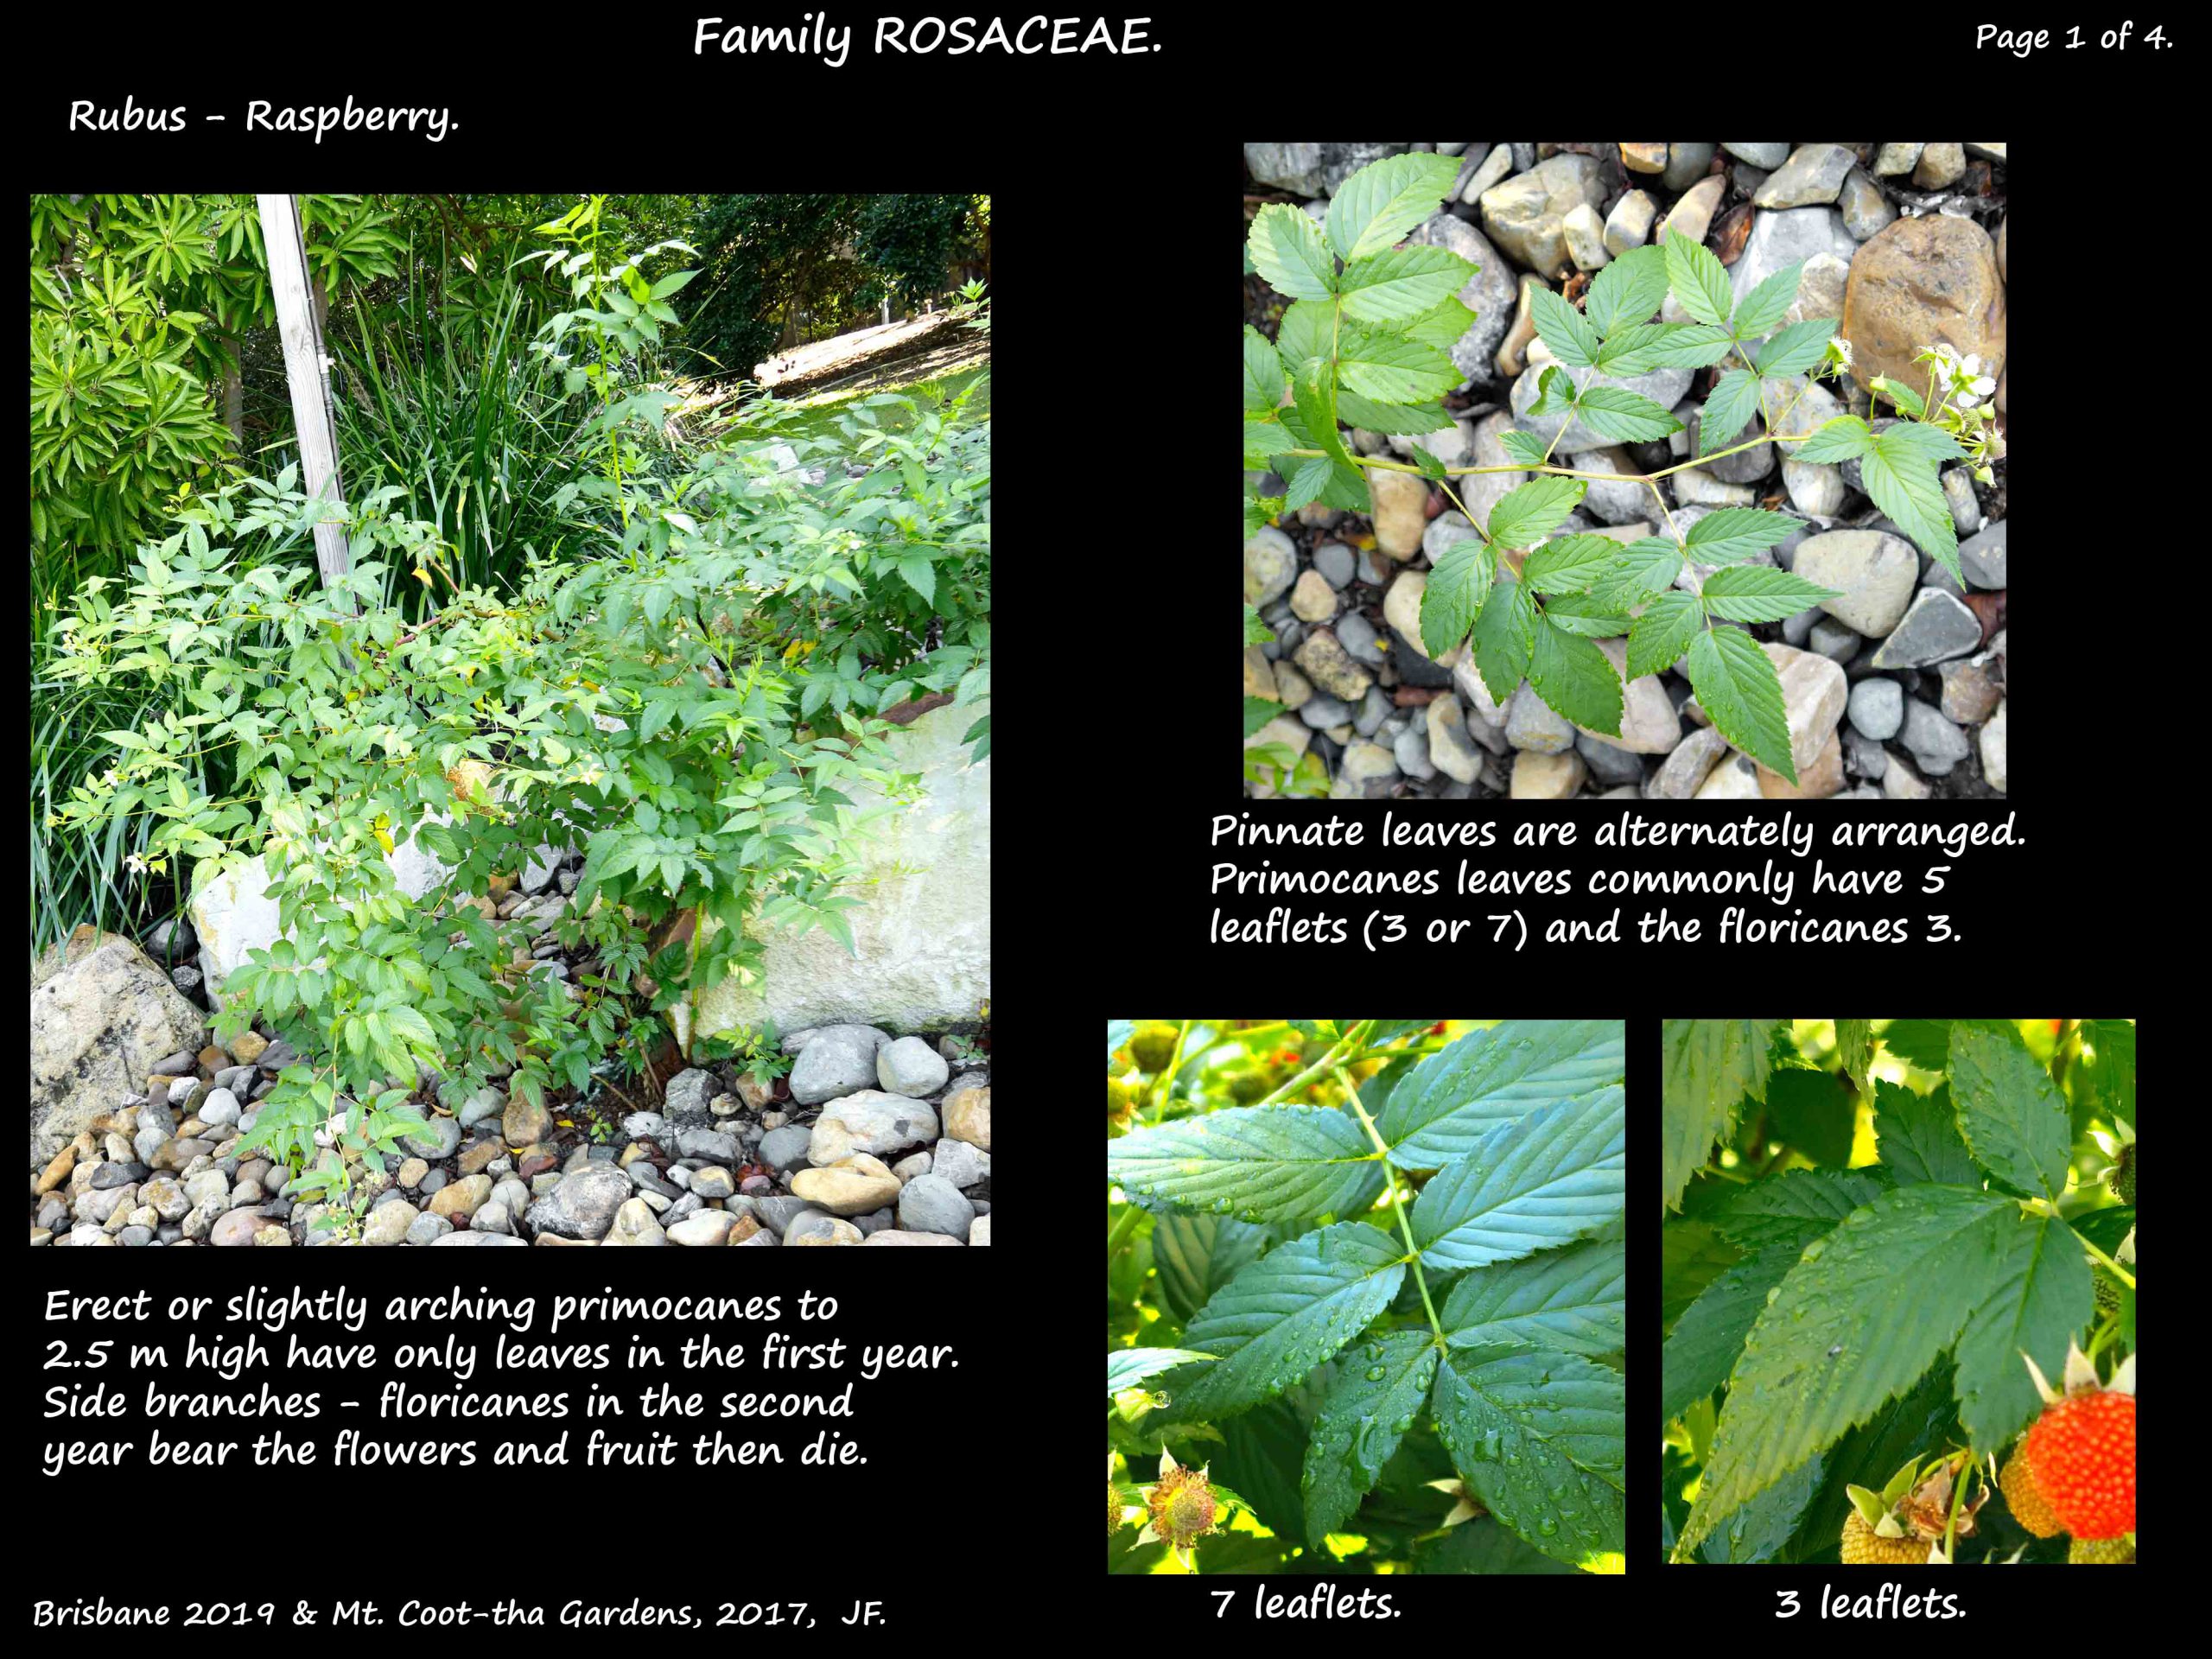 1 Raspberry vine & leaves